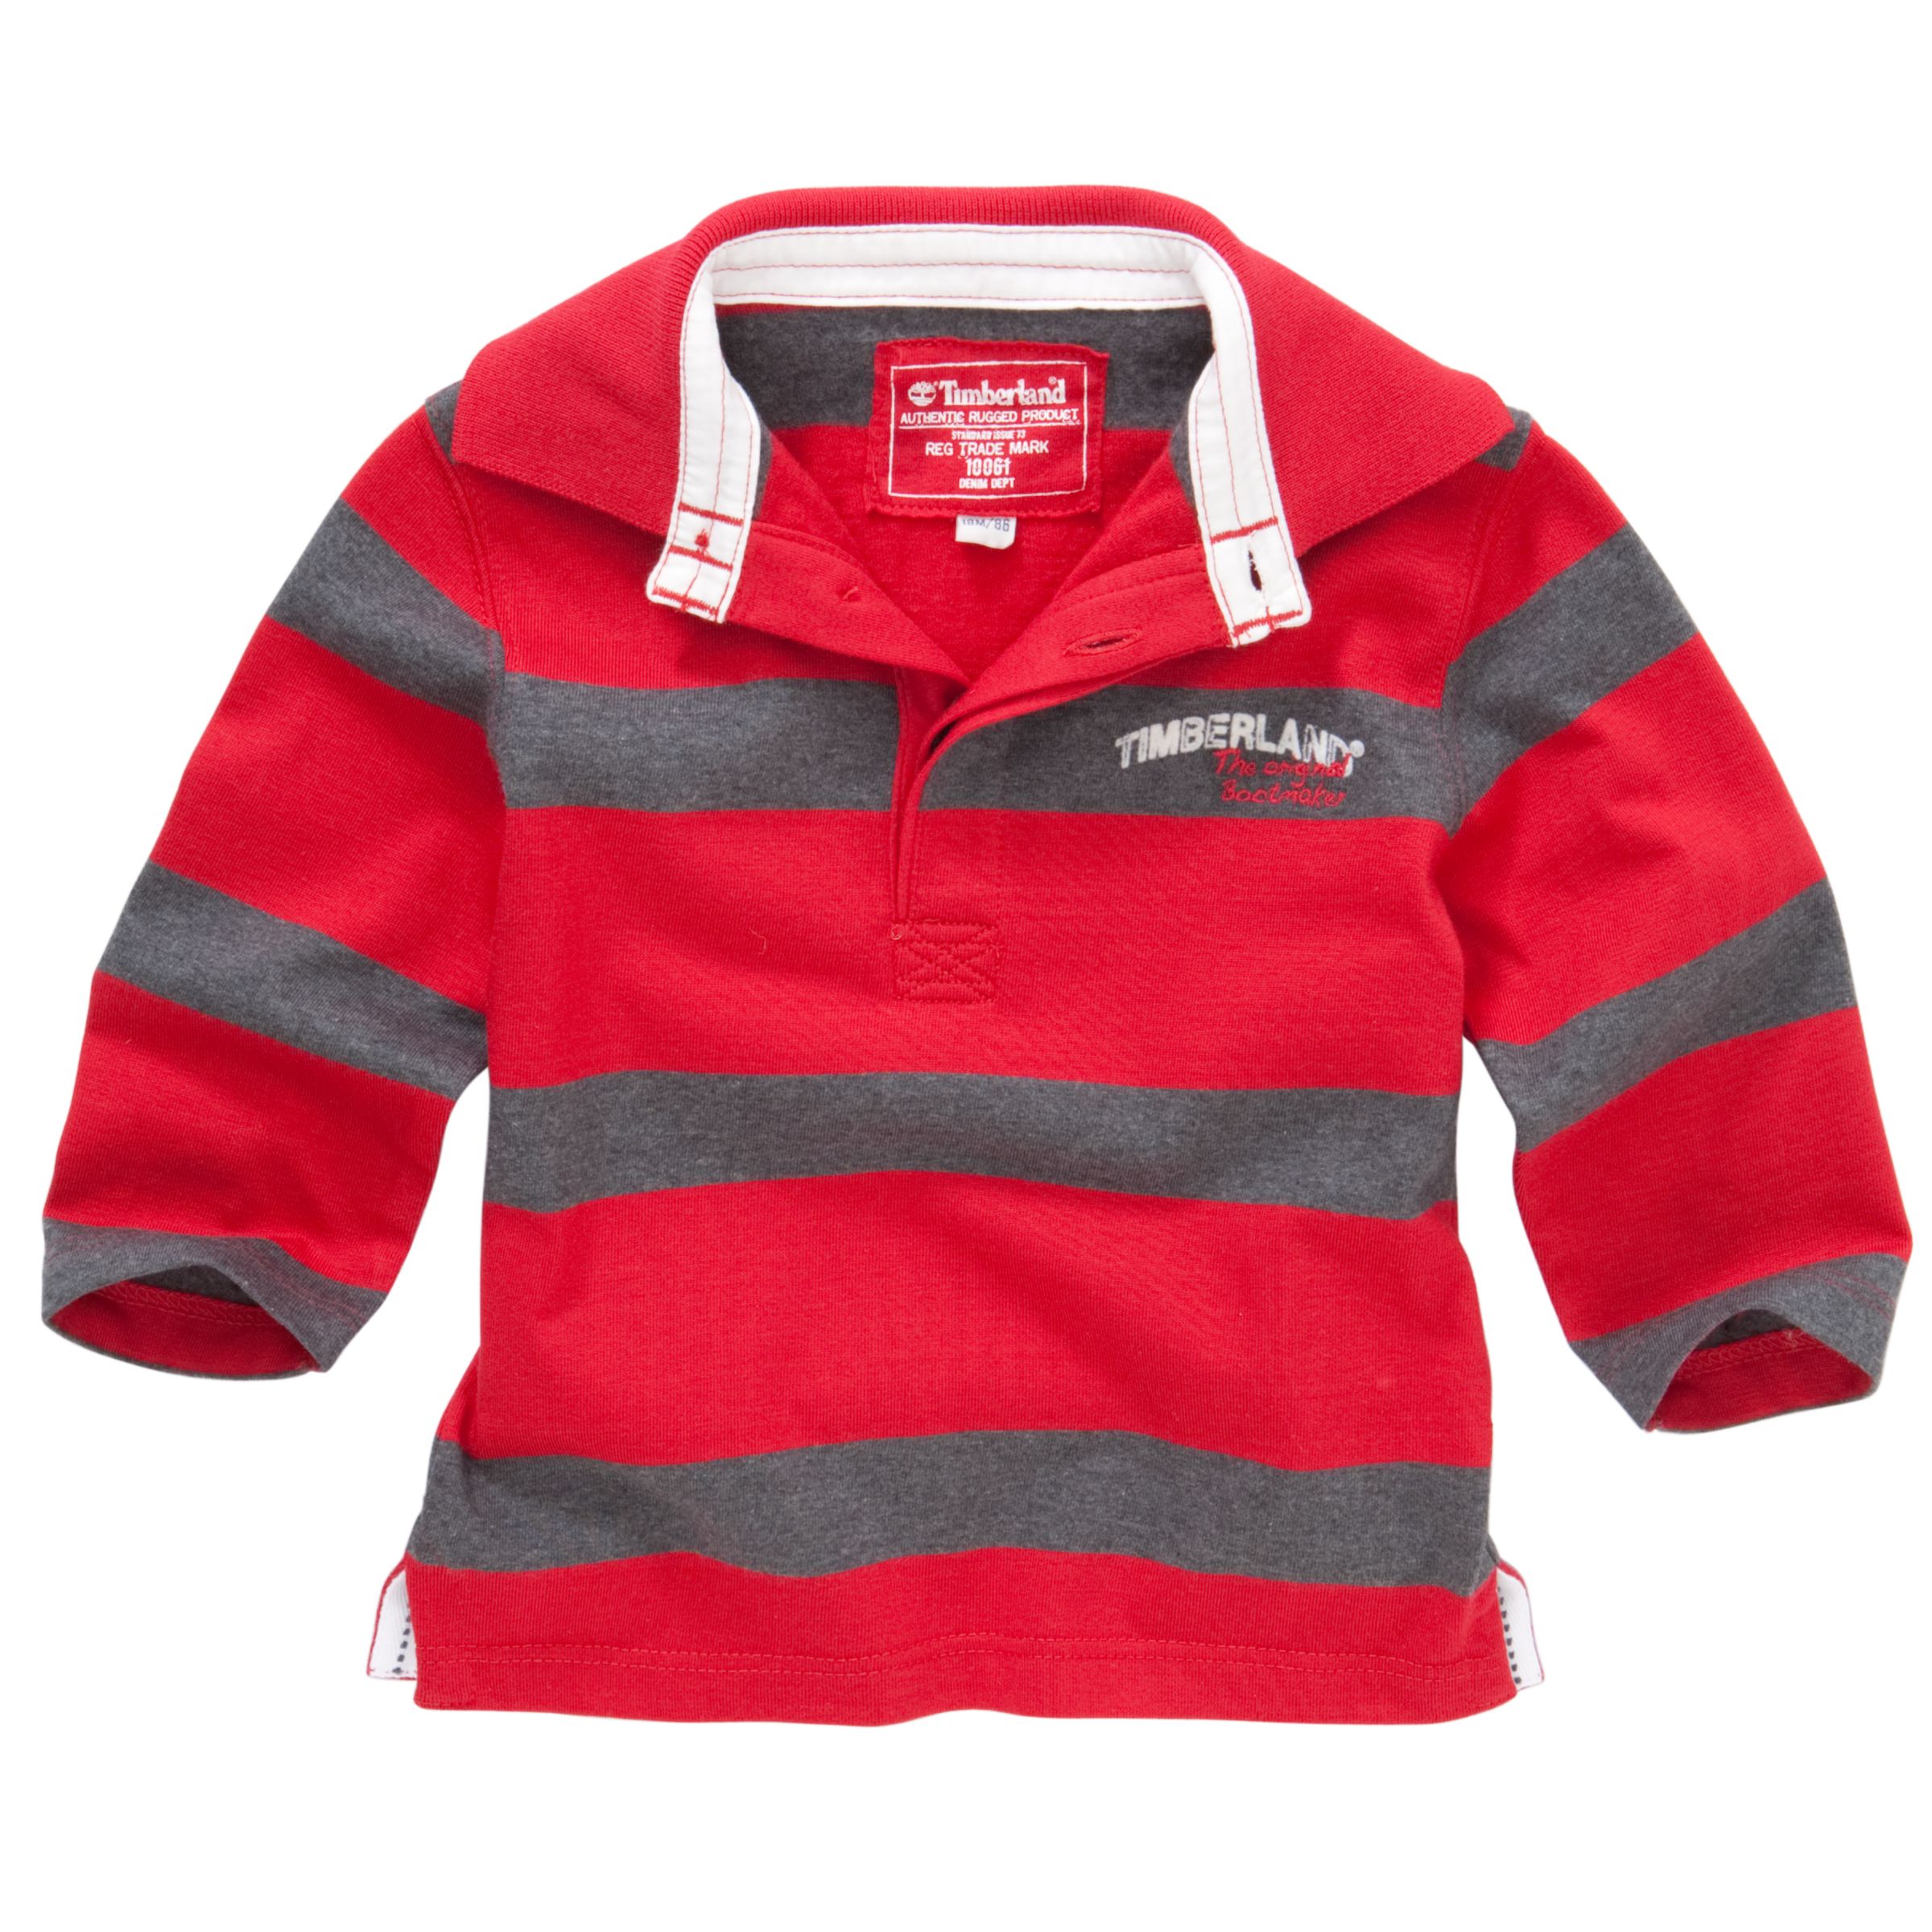 Stripe Print Long Sleeve Rugby Shirt,